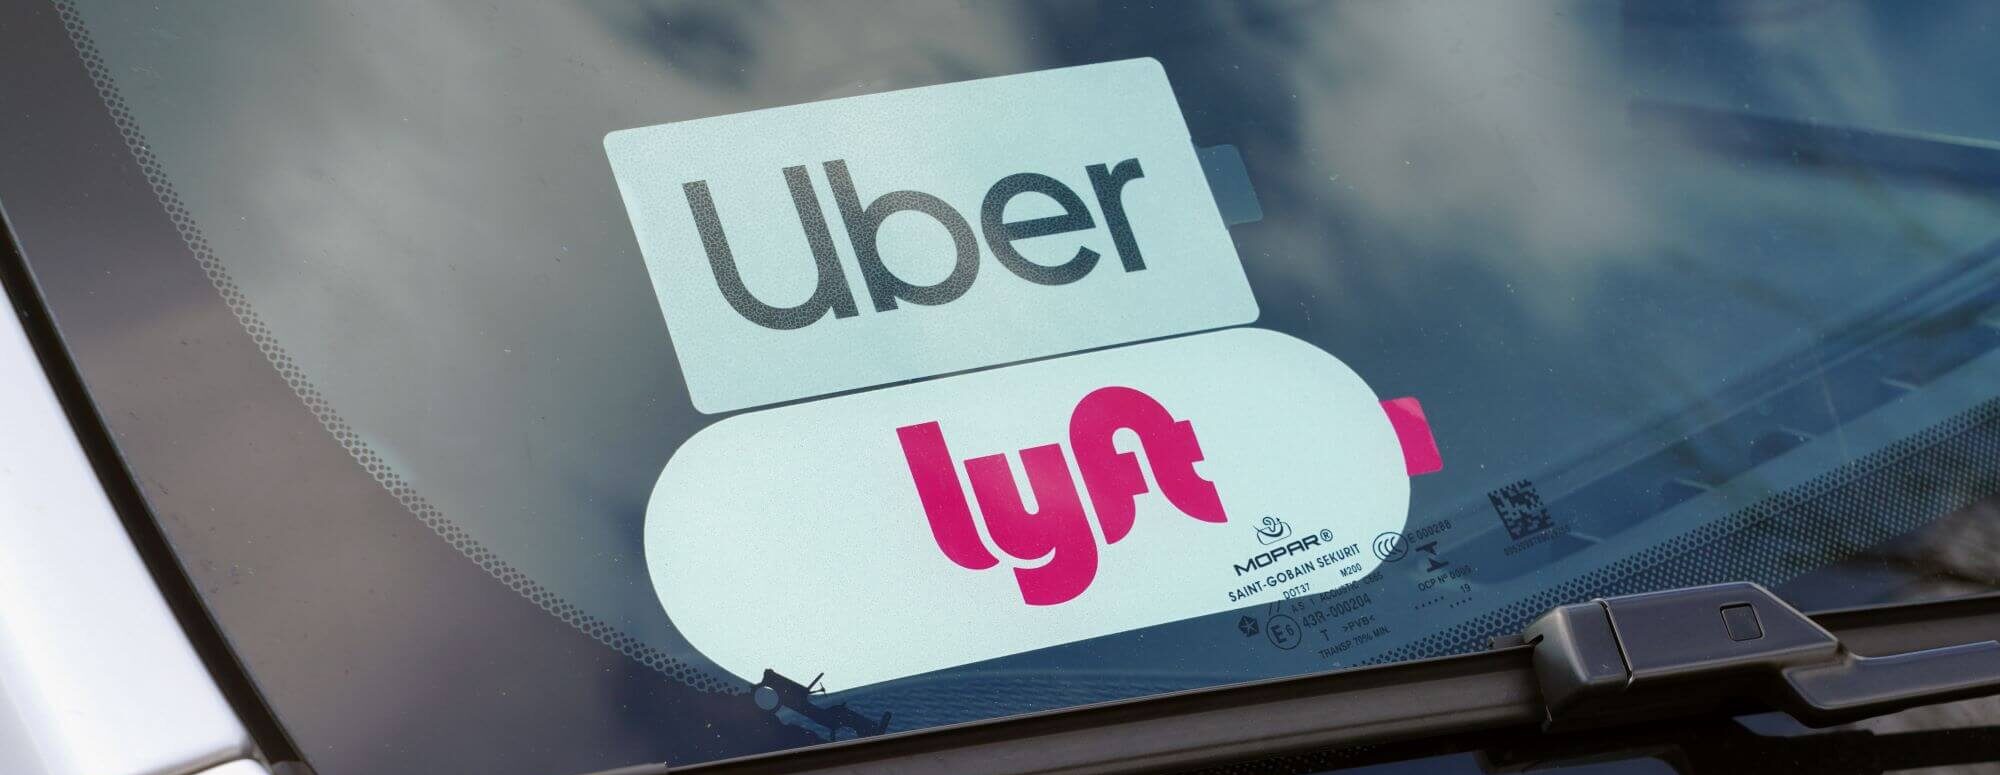 Uber and Lyft rideshare on window